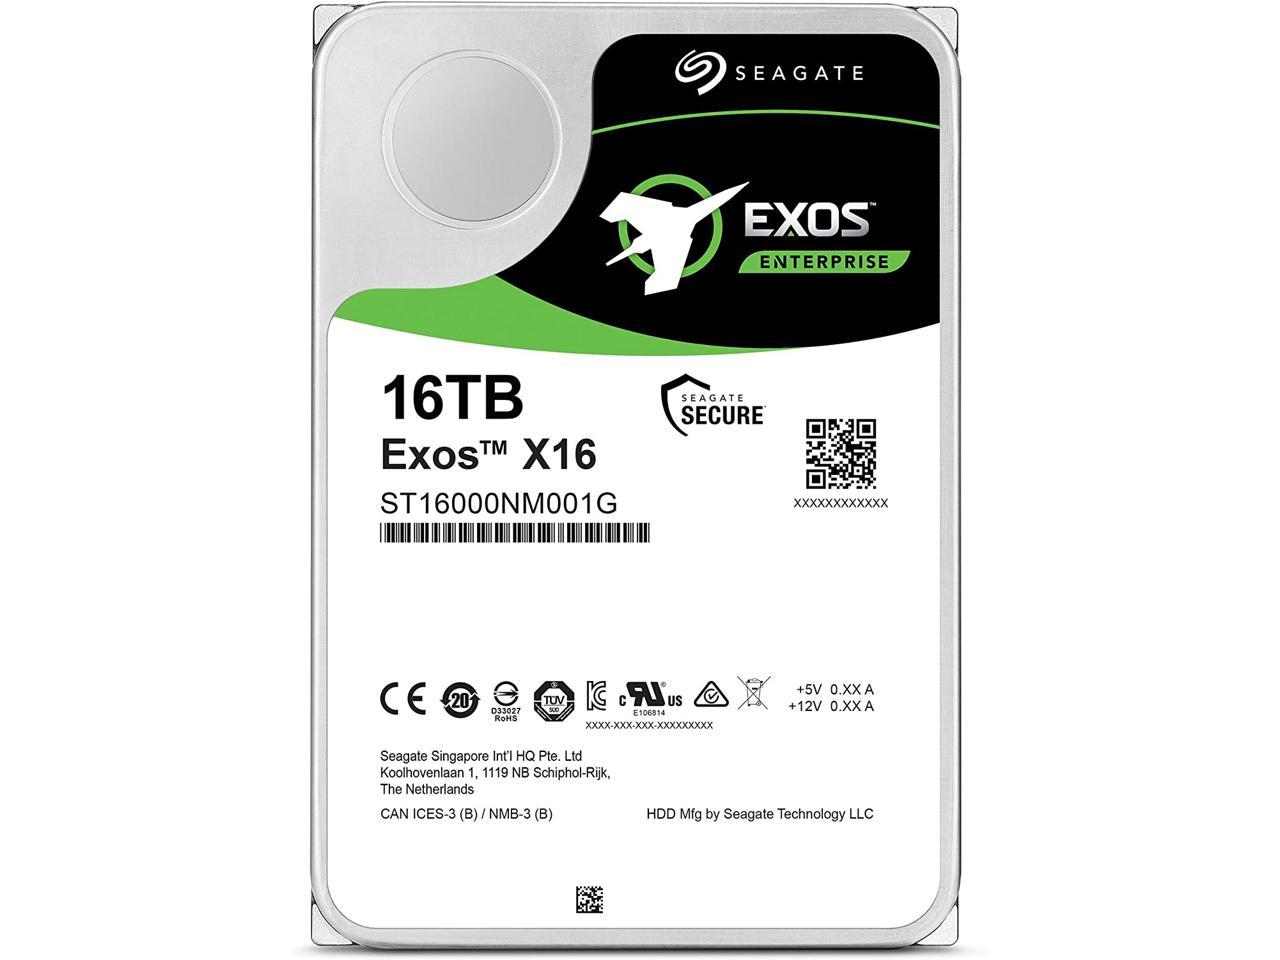 16TB Seagate Exos Enterprise HDD X16 @Newegg $310